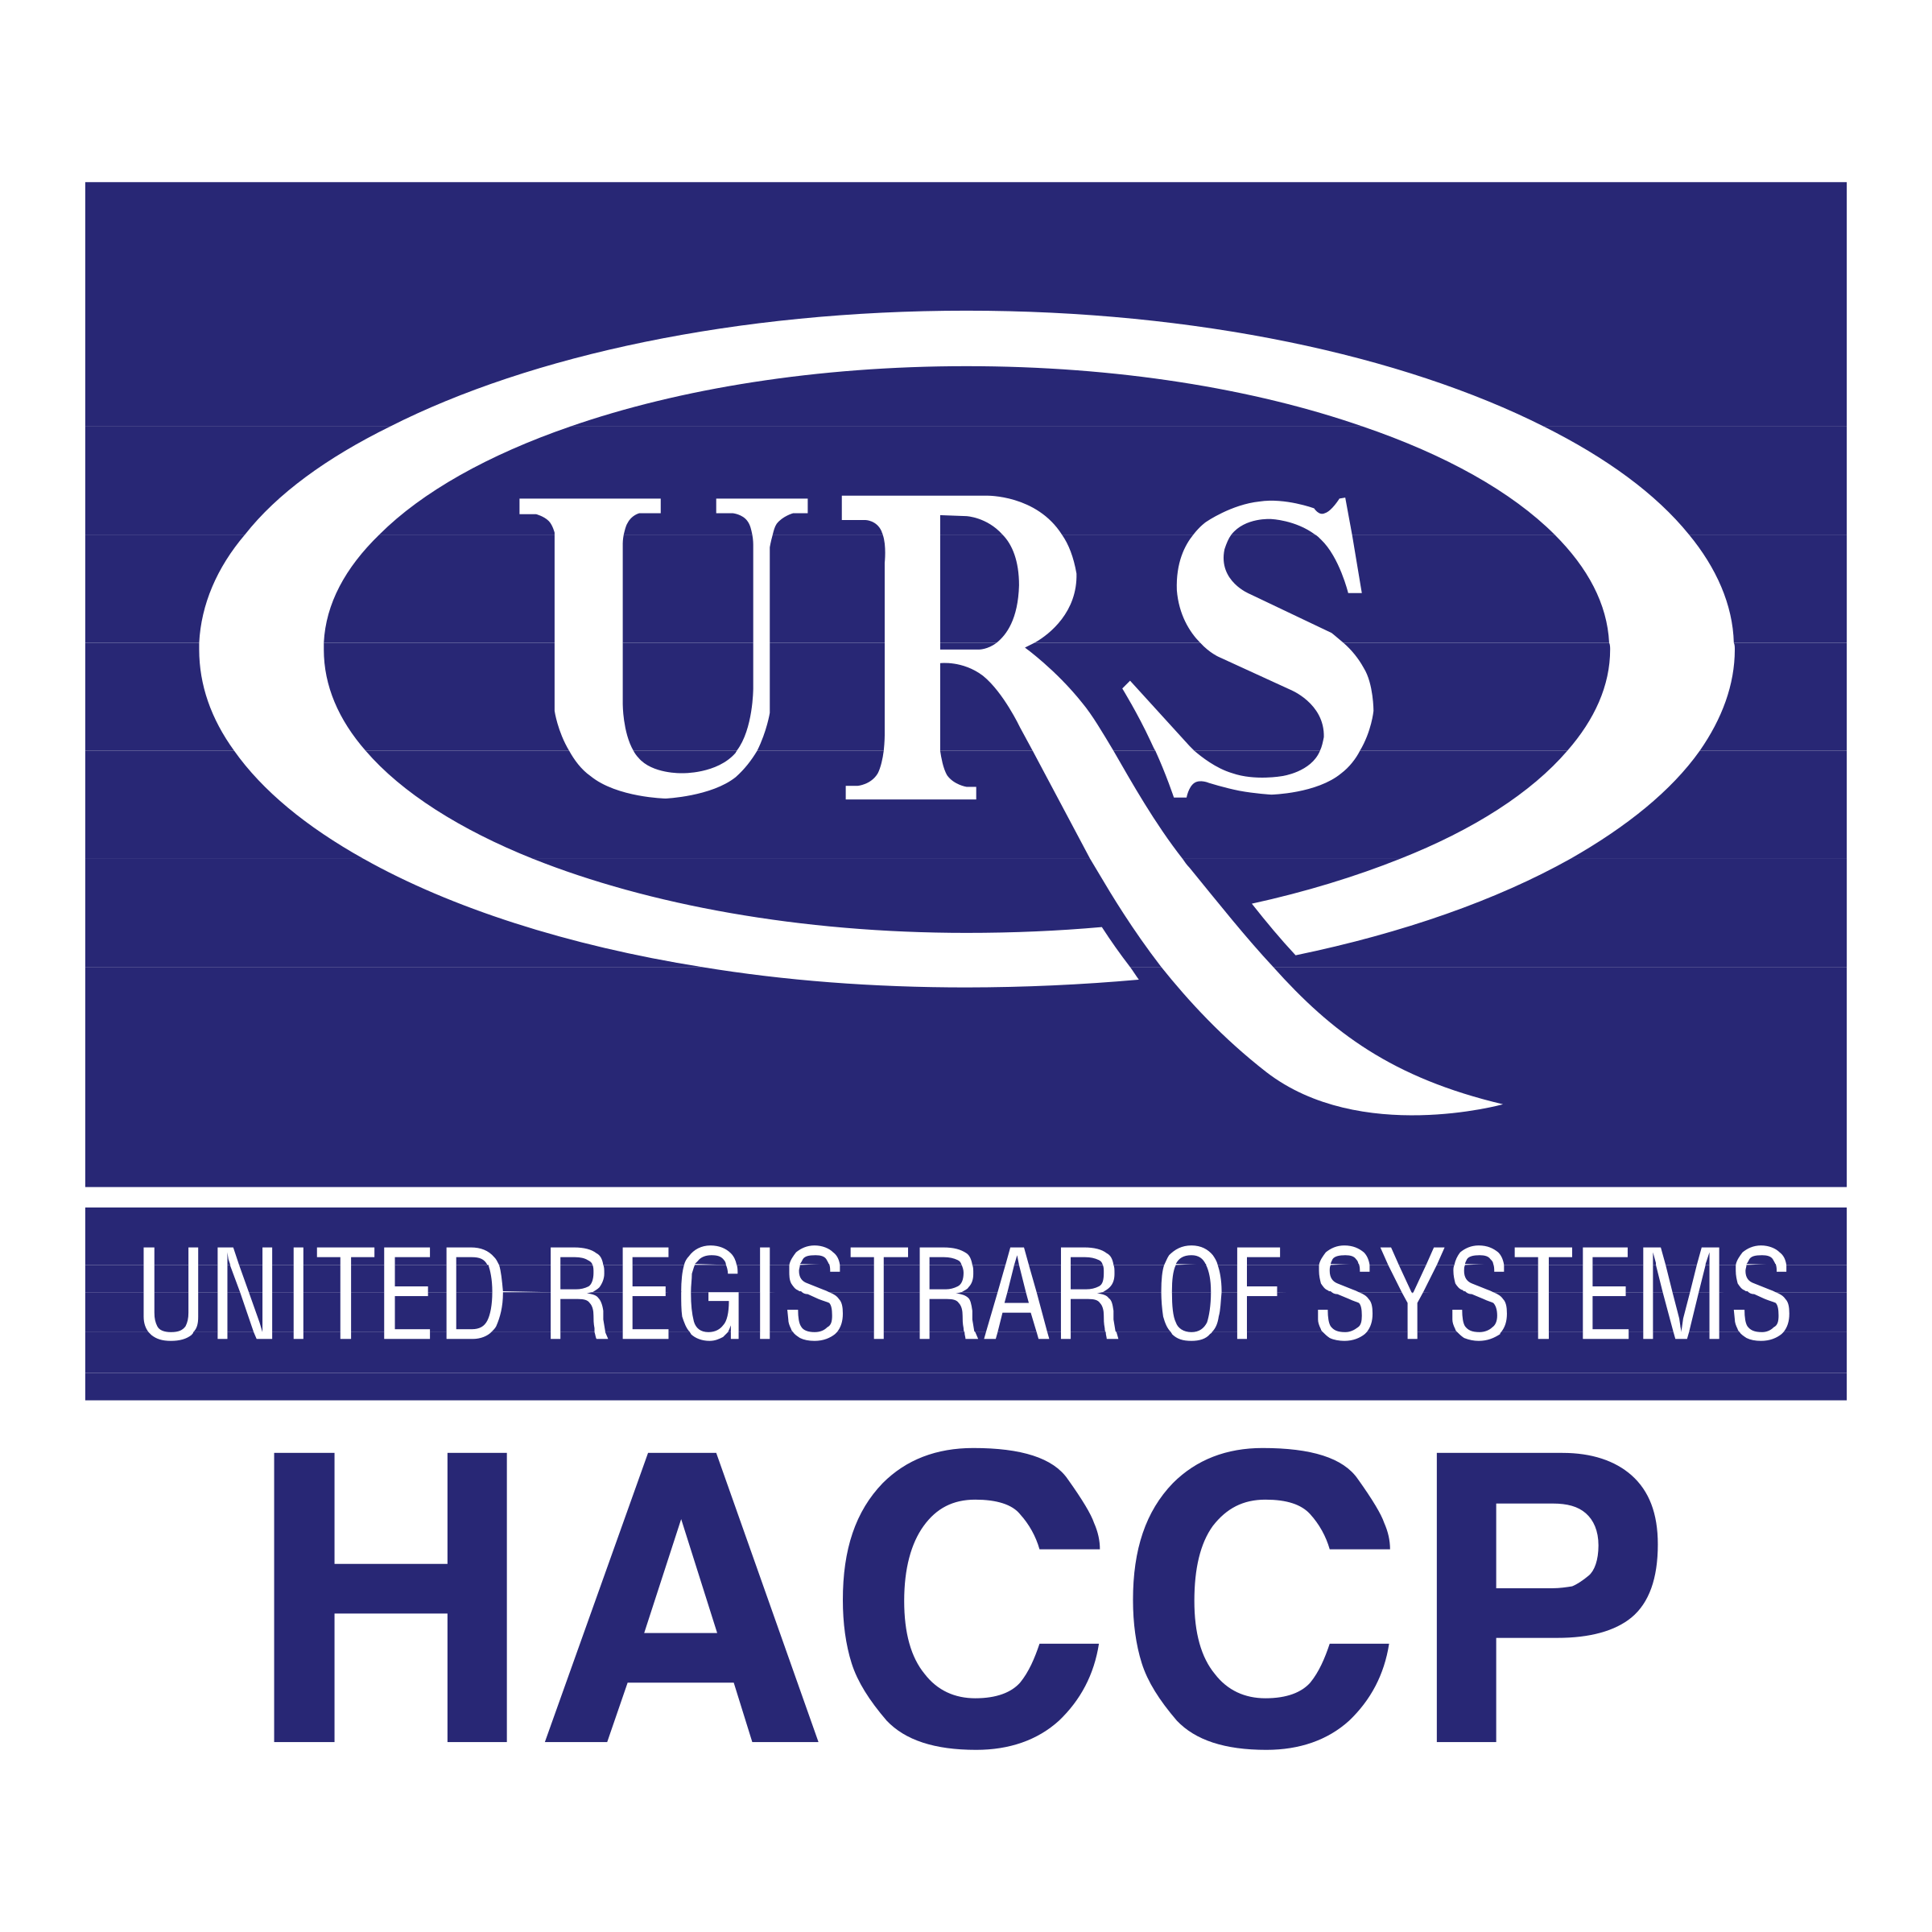 HACCP Logo - URS HACCP Logo PNG Transparent & SVG Vector